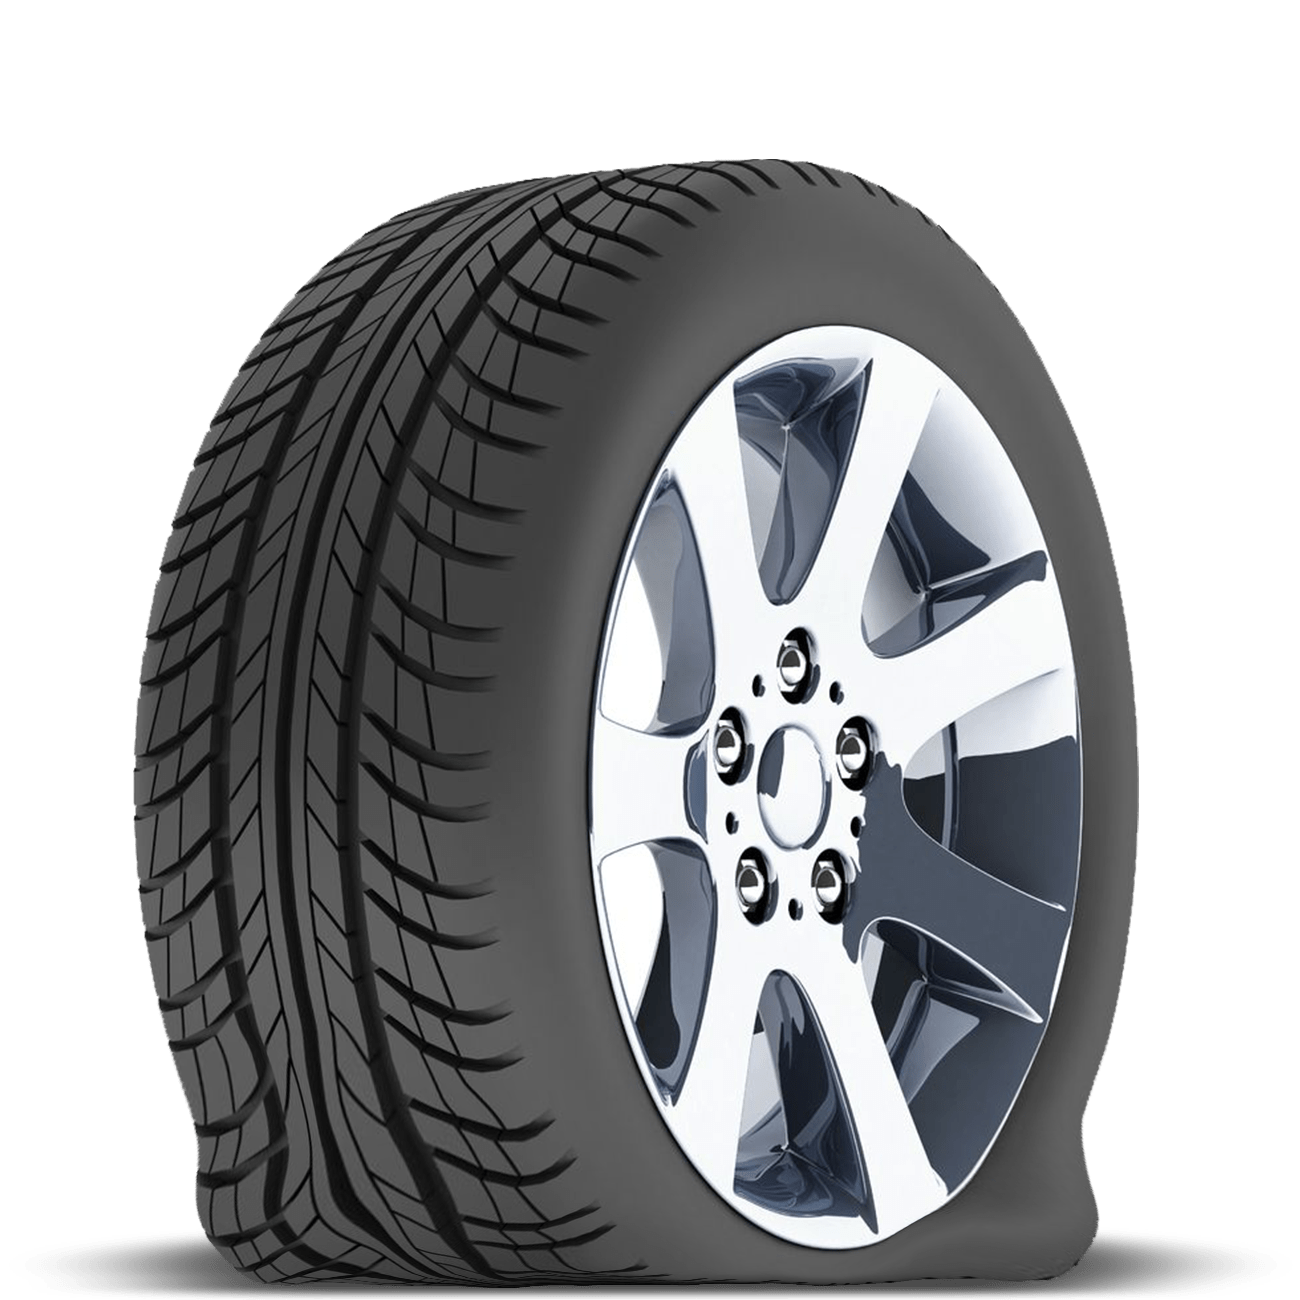 Flat Tyre SVG Clip arts